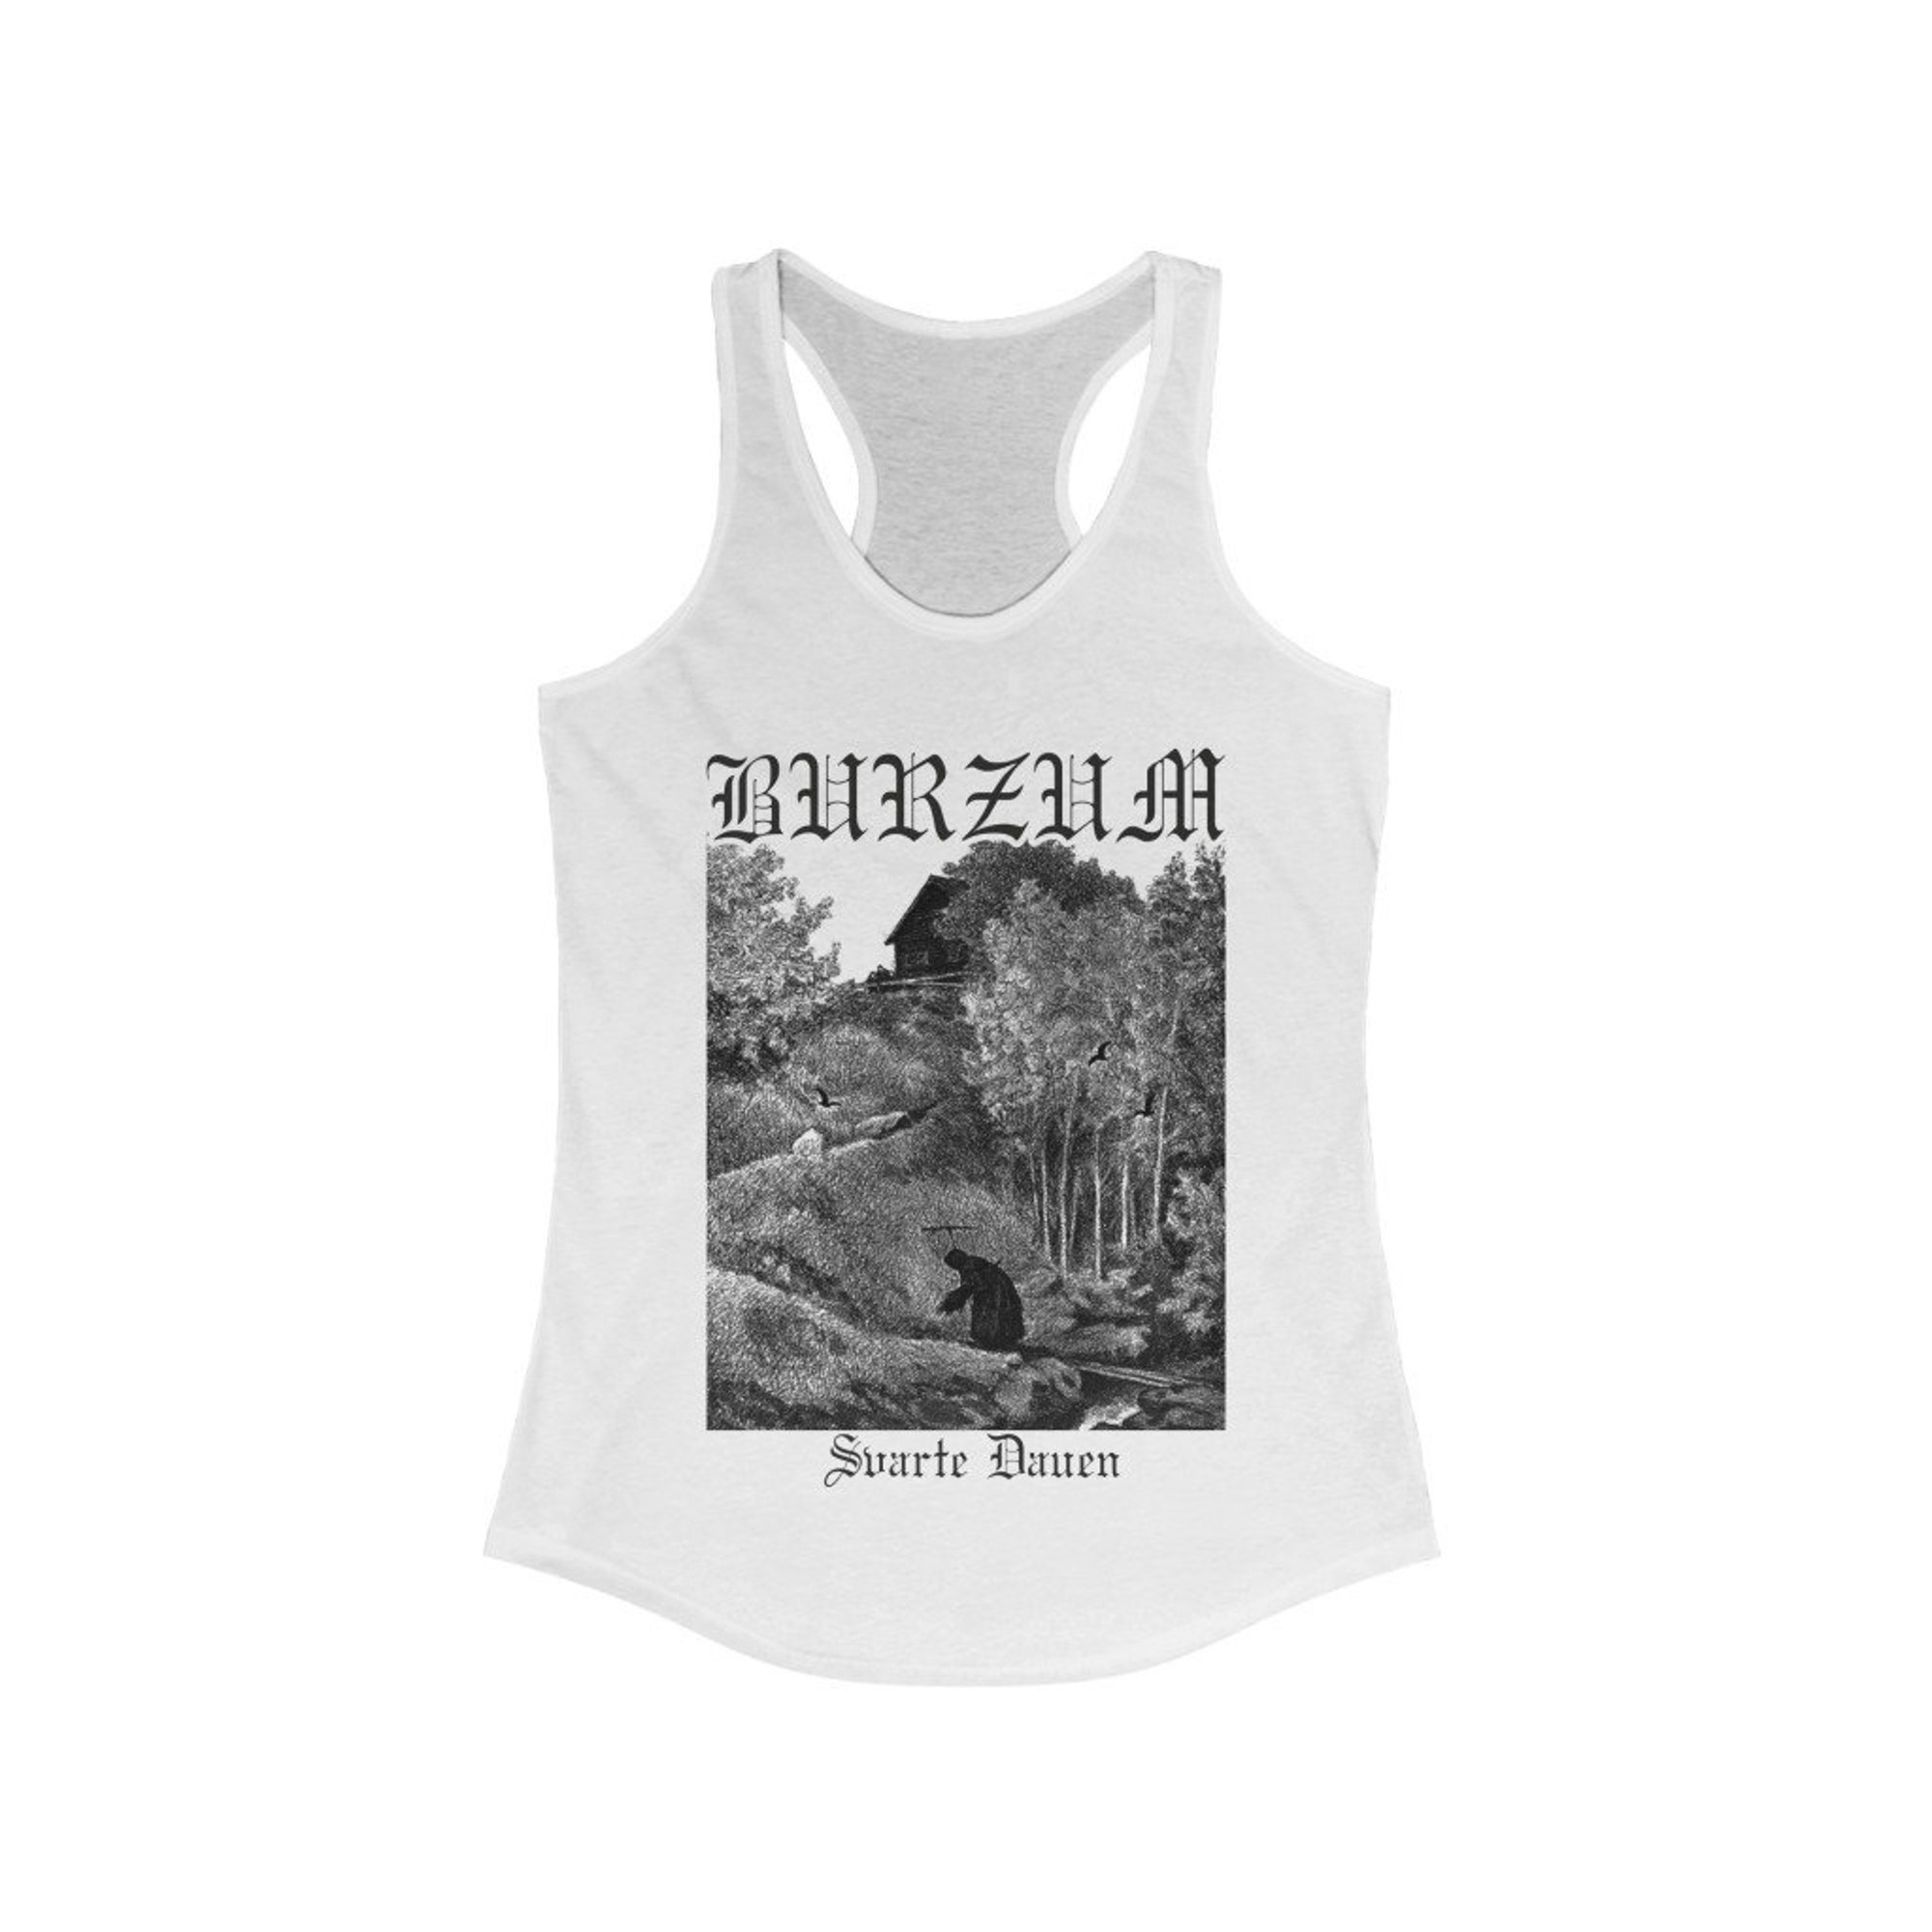 Discover Burzum Womens Tank Top, Burzum - Svarte dauen, Burzum Black Metal Sleeveless Tee